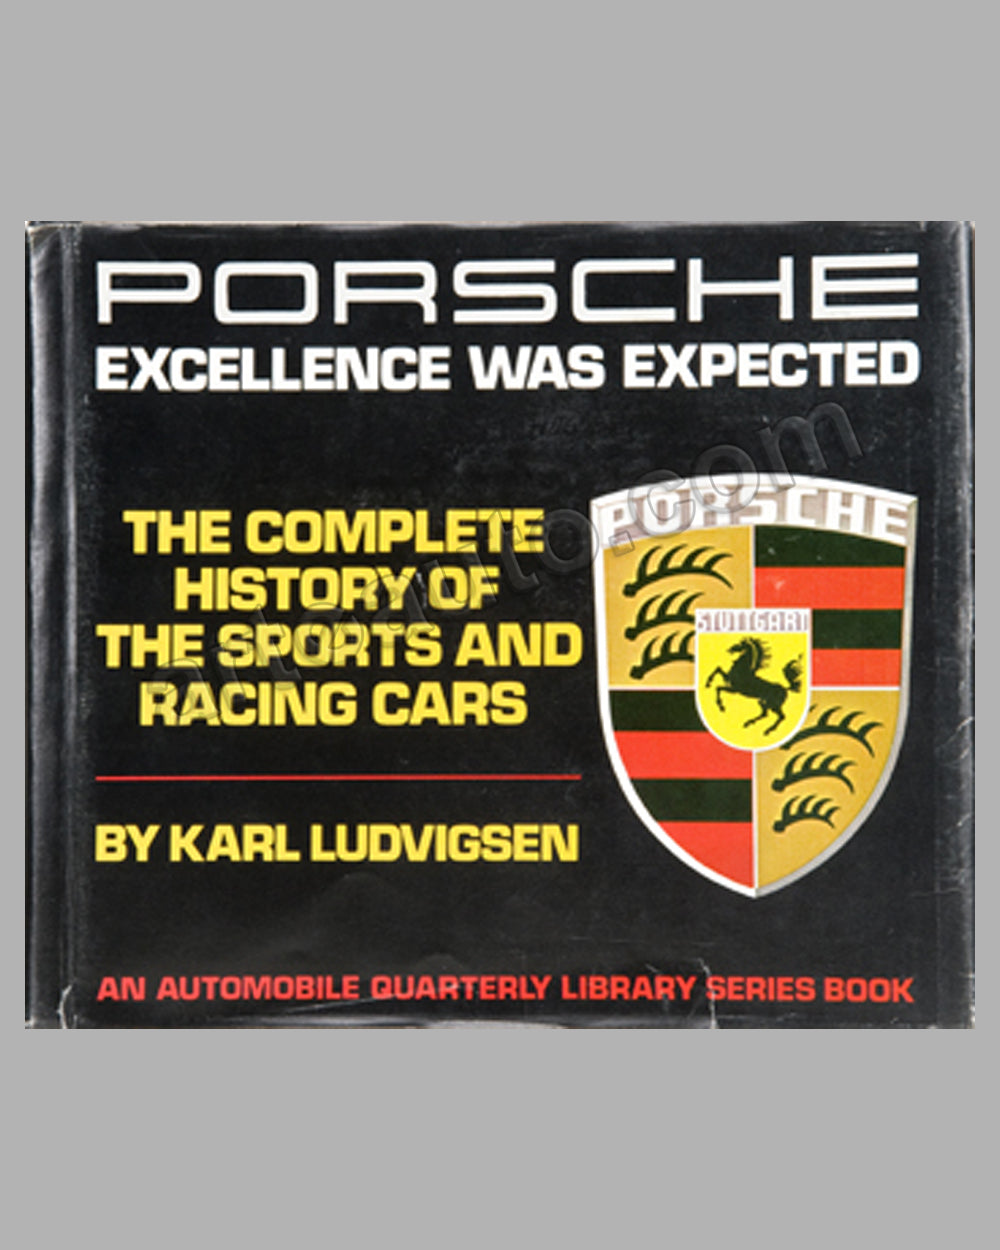 Porsche - Excellence was Expected book by K. Ludvigsen